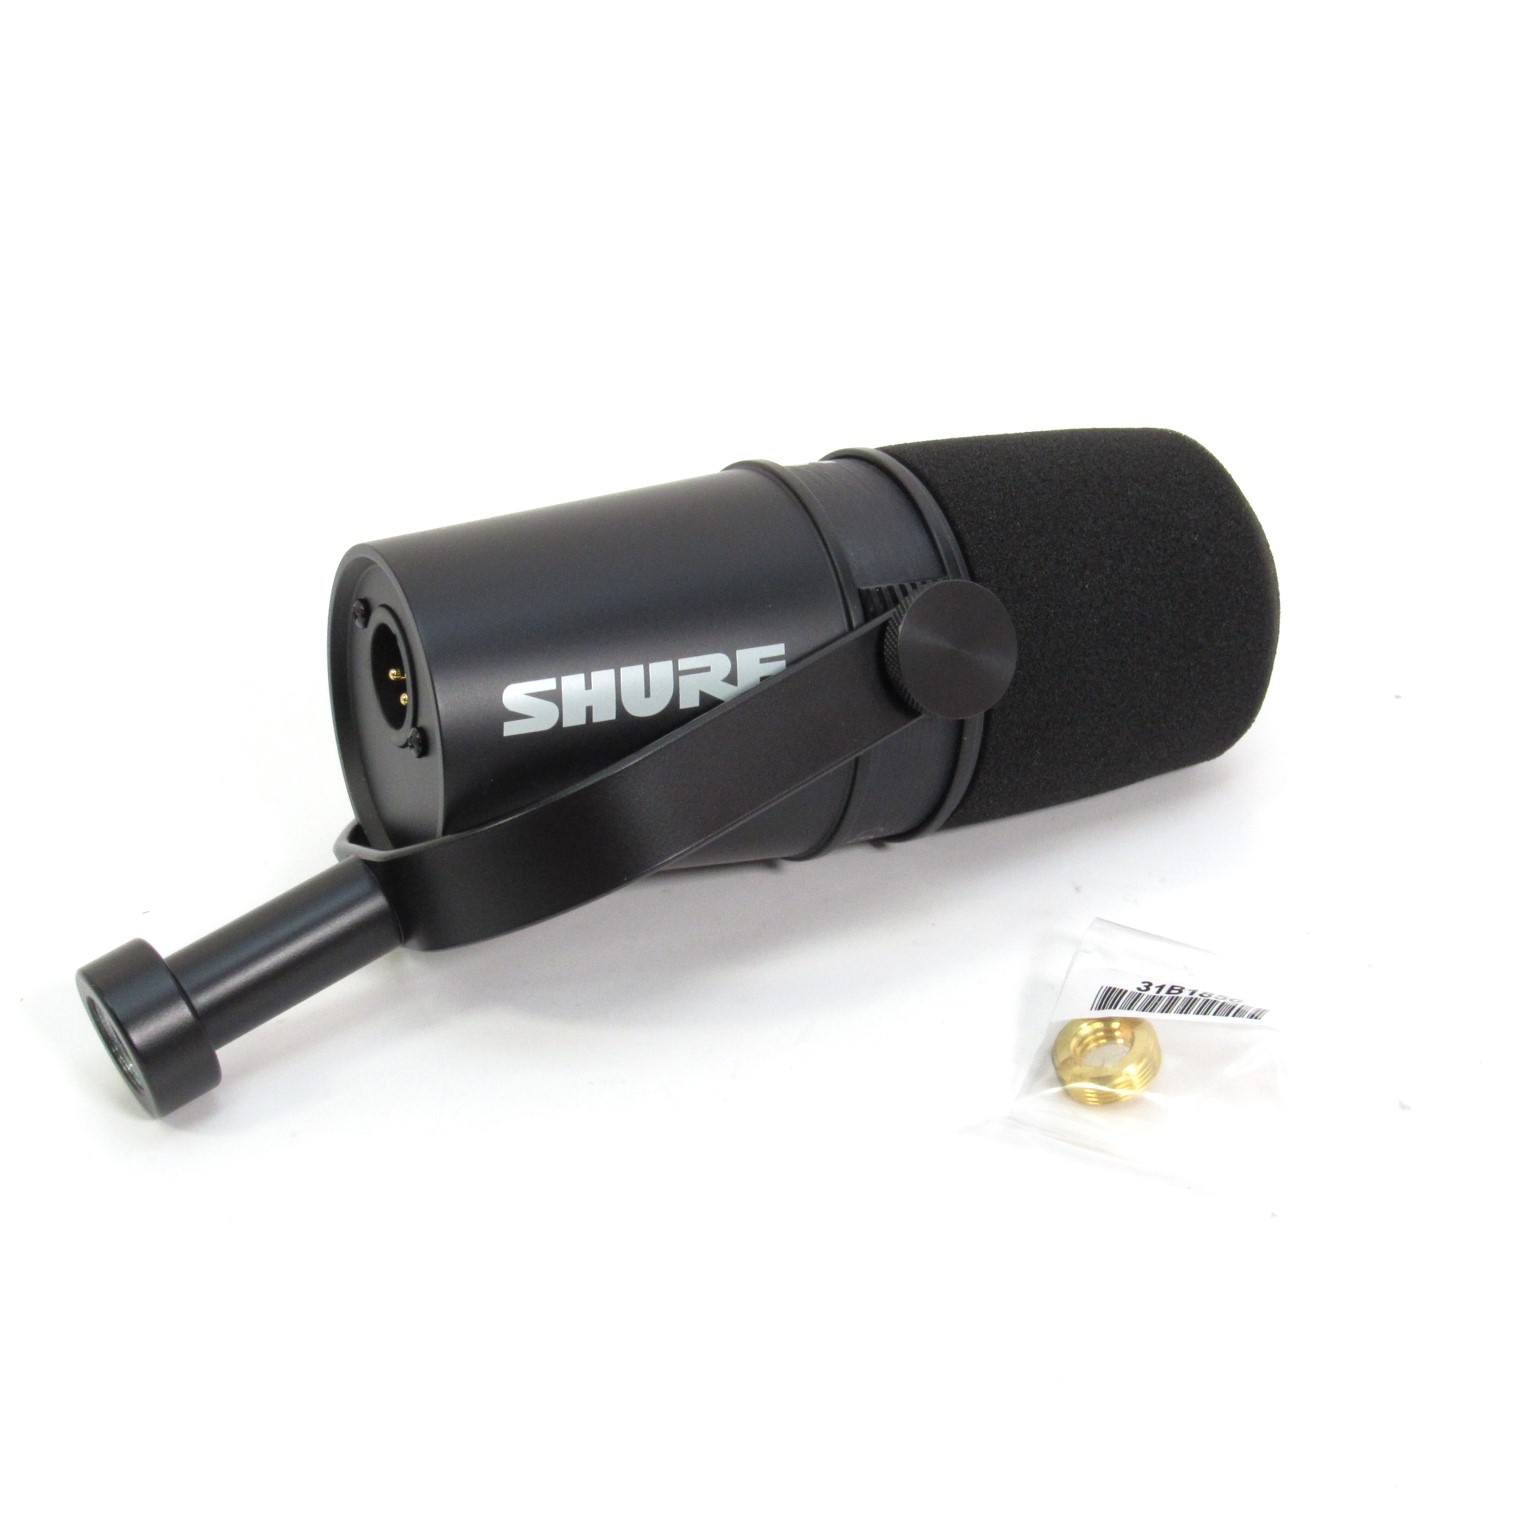 Shure Mv7x Dynamic Microphone